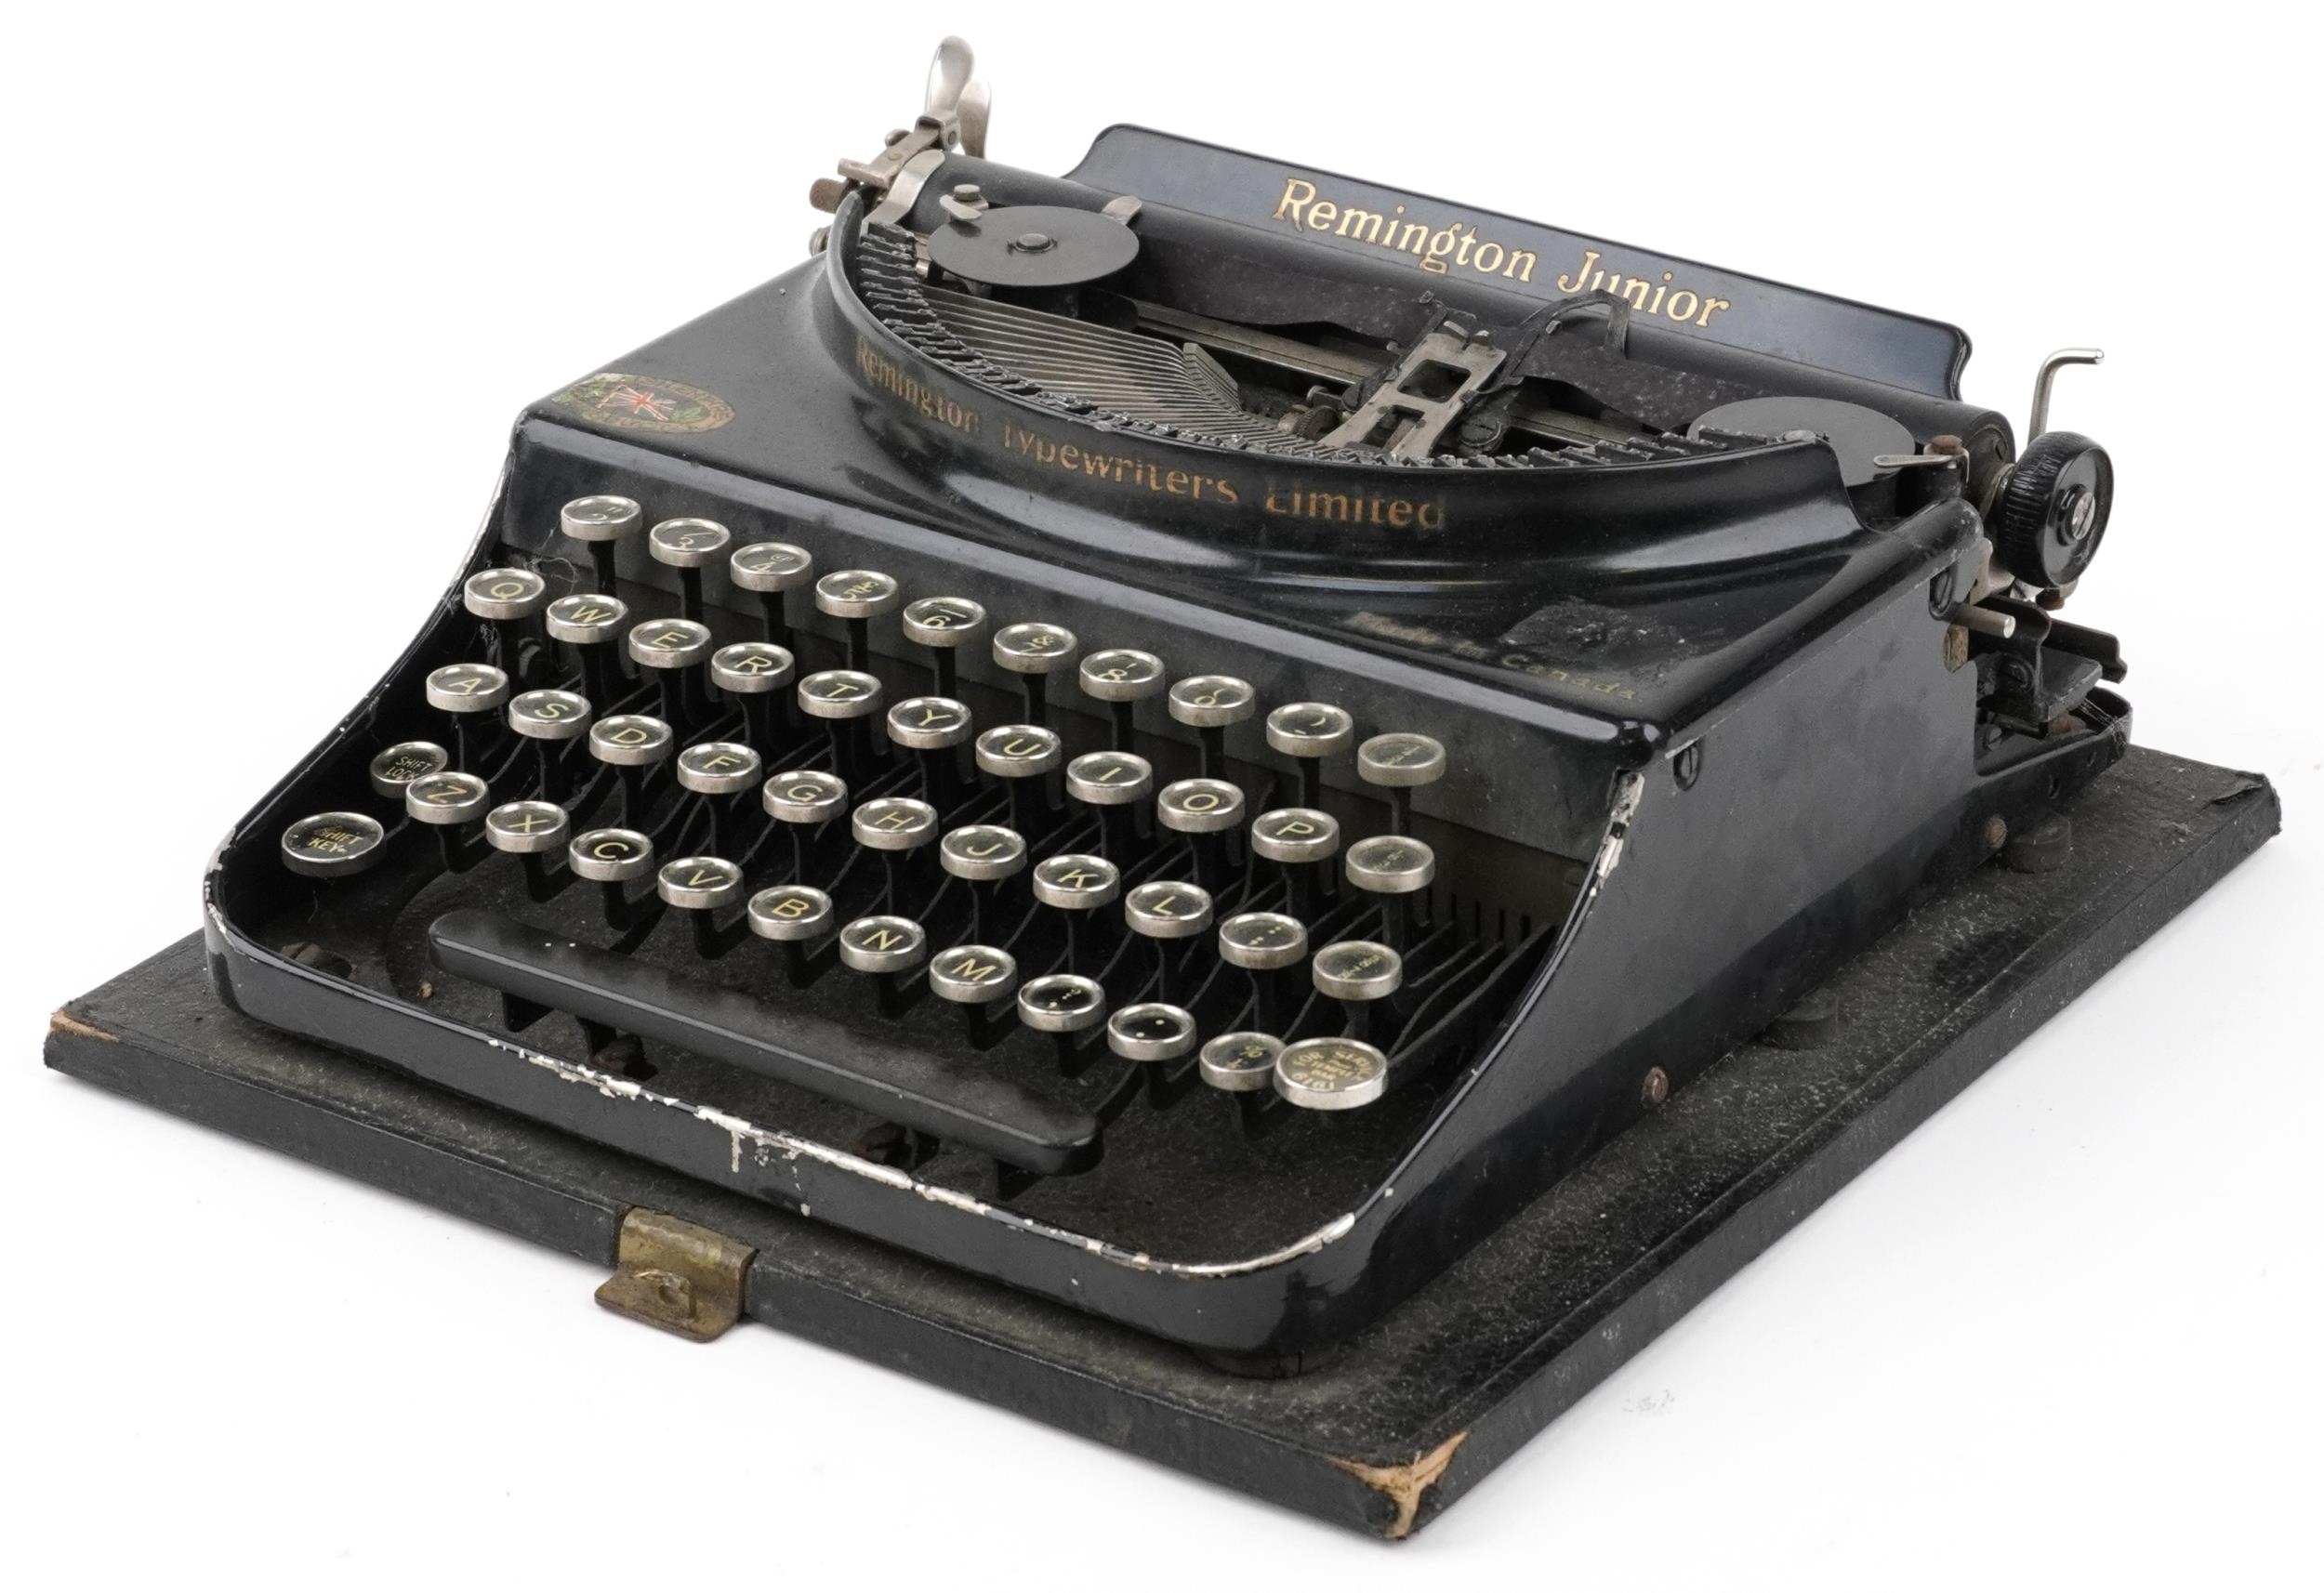 Vintage Remington portable typewriter with case - Bild 2 aus 5